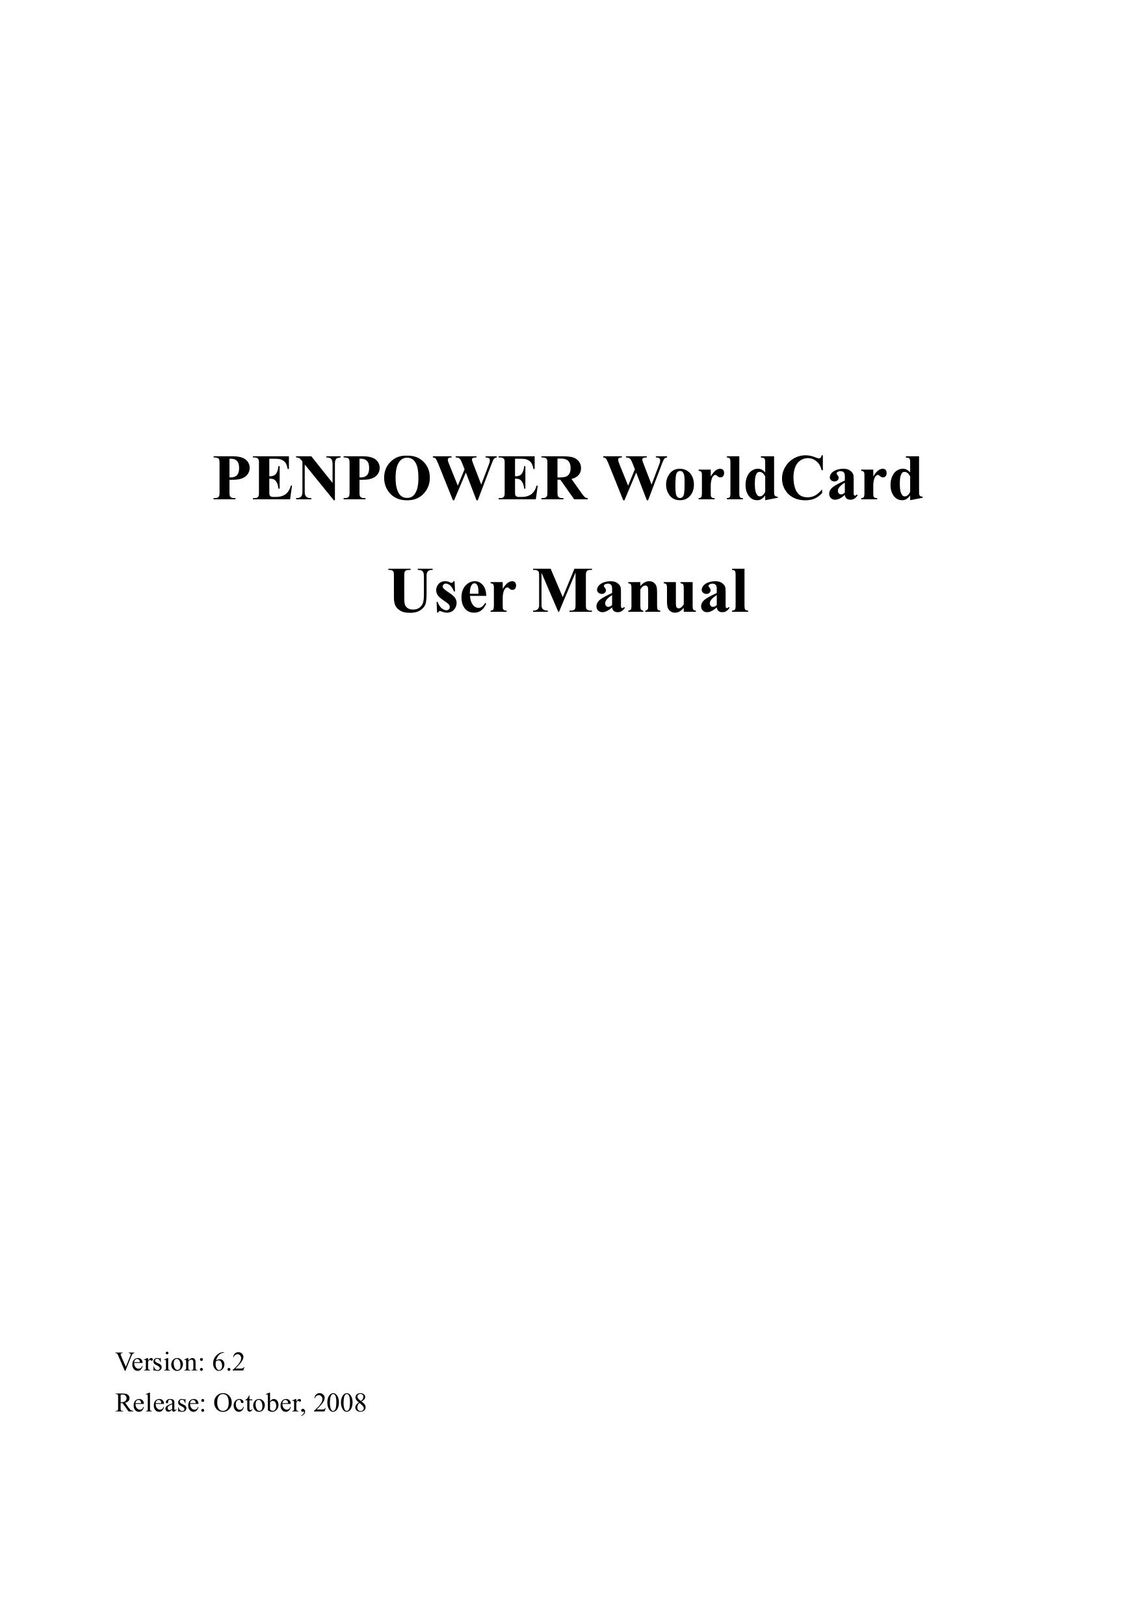 Penpower duet 2 Scanner User Manual